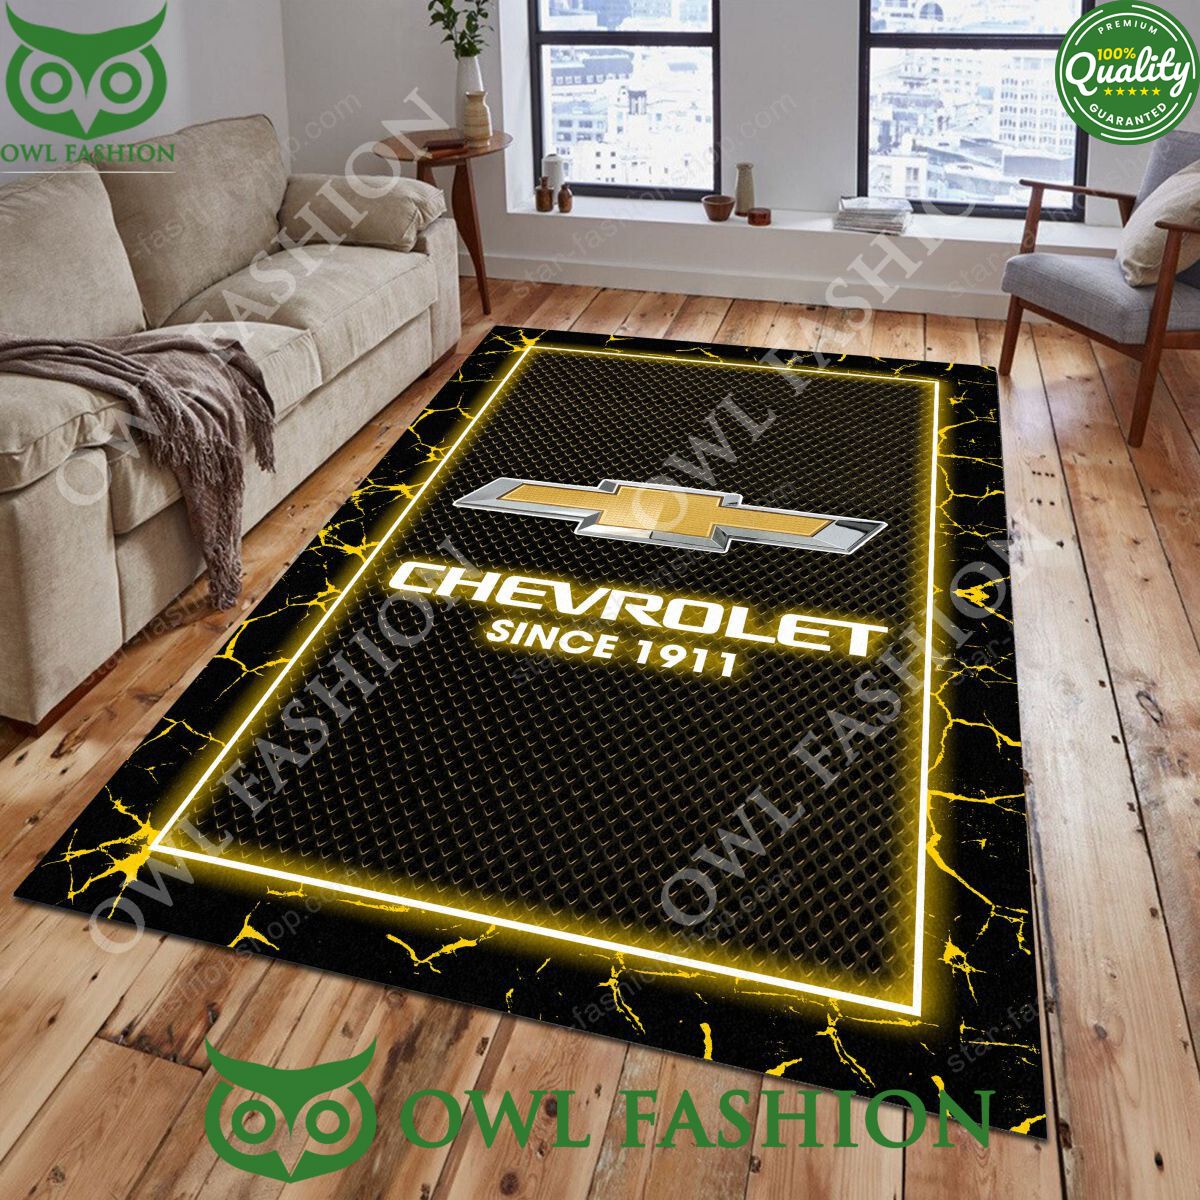 Chevrolet Trending Car Brand Limited Carpet Rug Coolosm